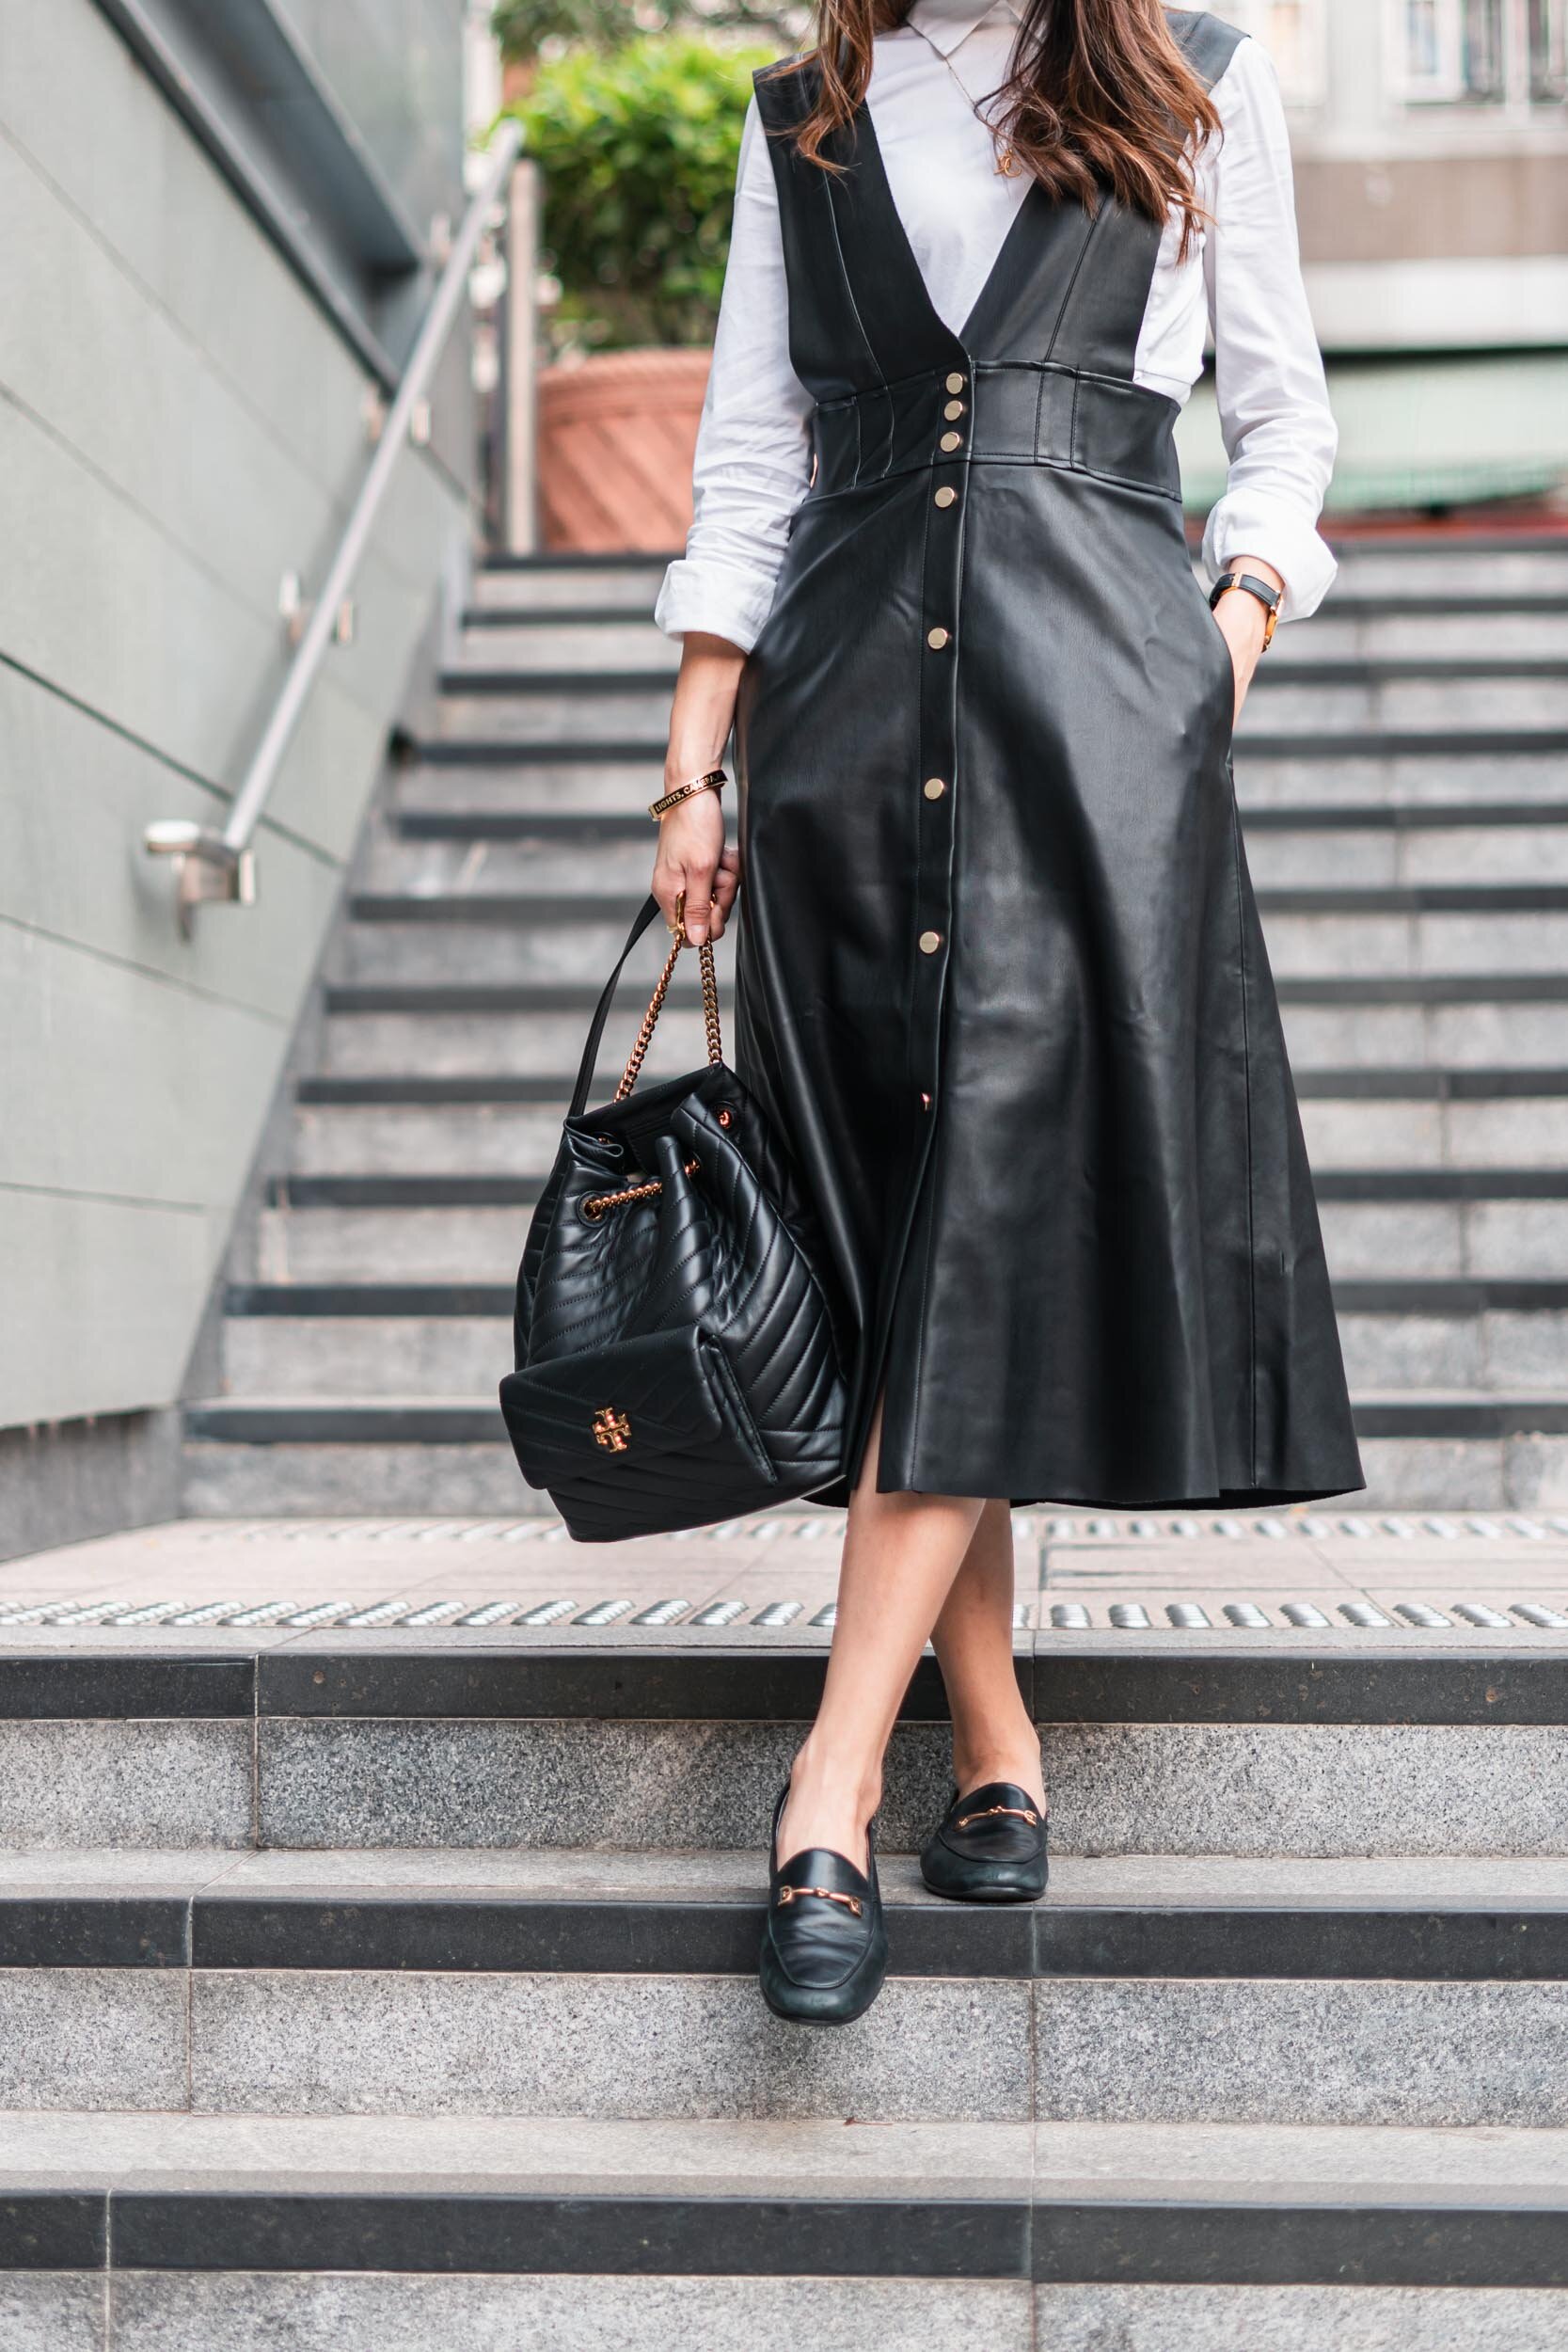 Sydney Sweeney Wears Black Leather Dress (Photos)